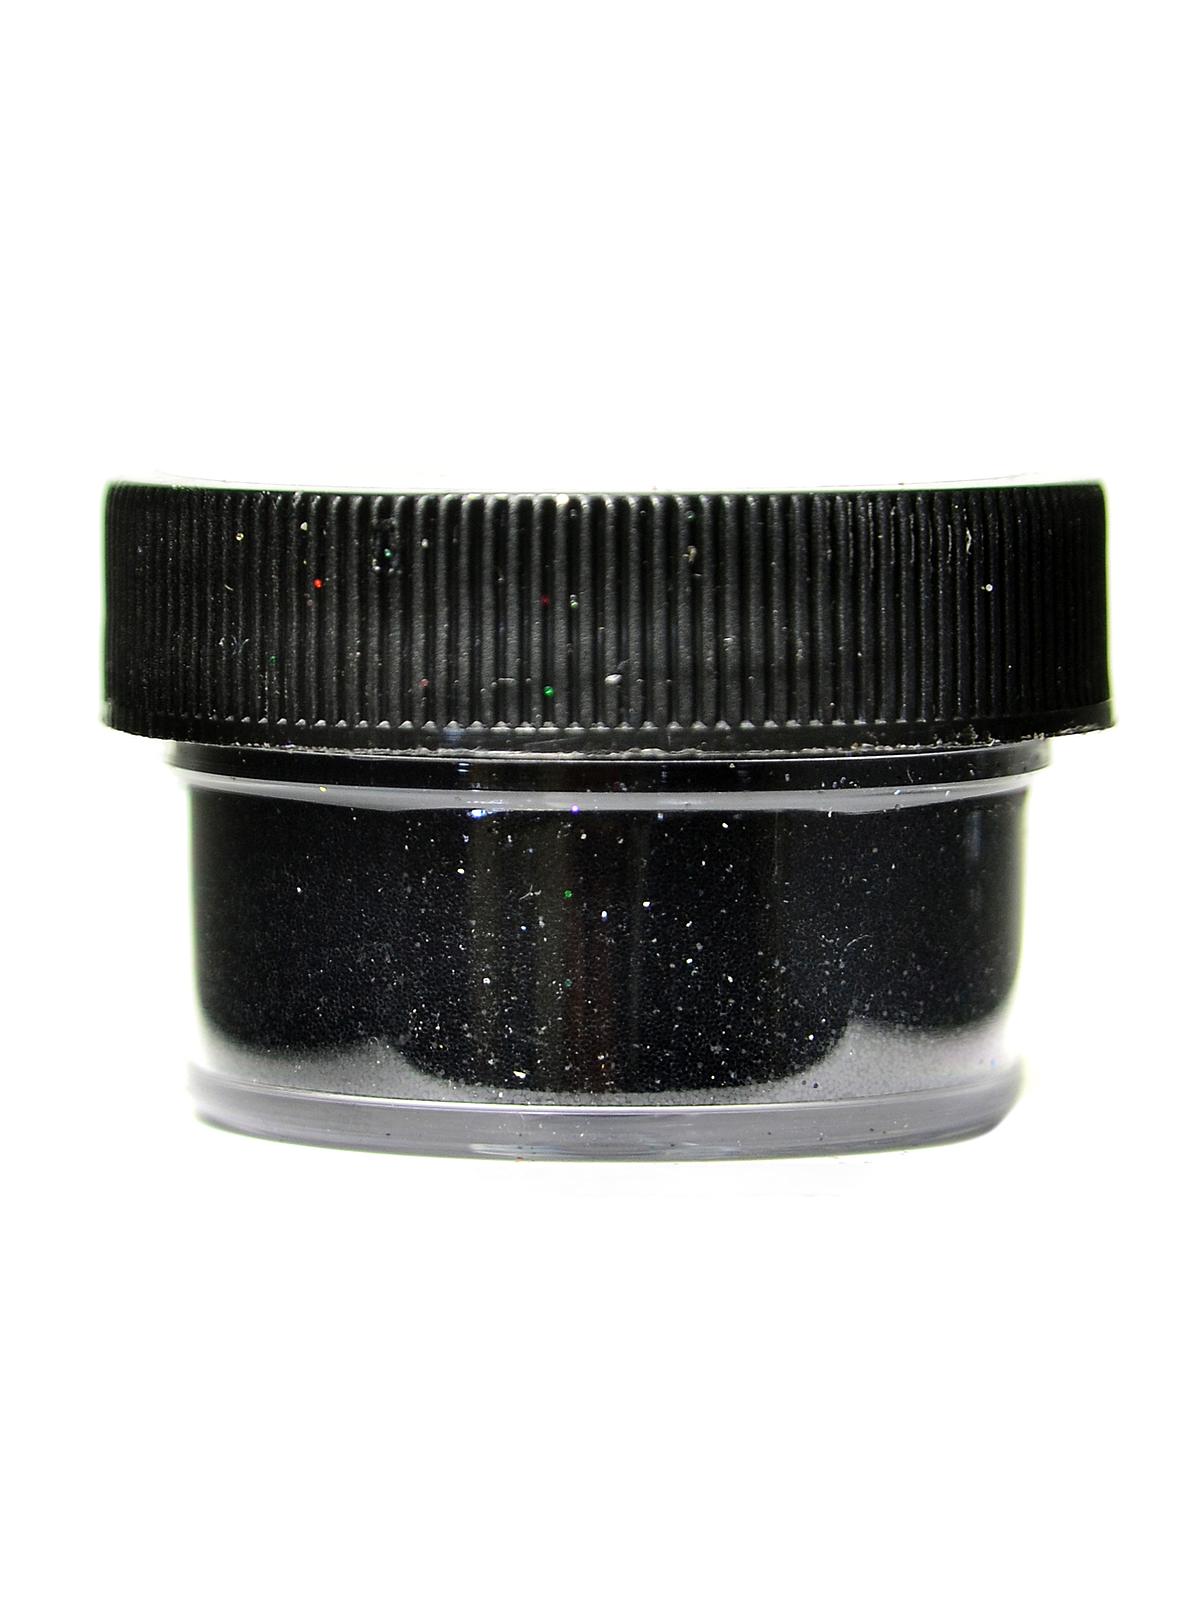 Ultrafine Opaque Glitter Black 1 2 Oz. Jar